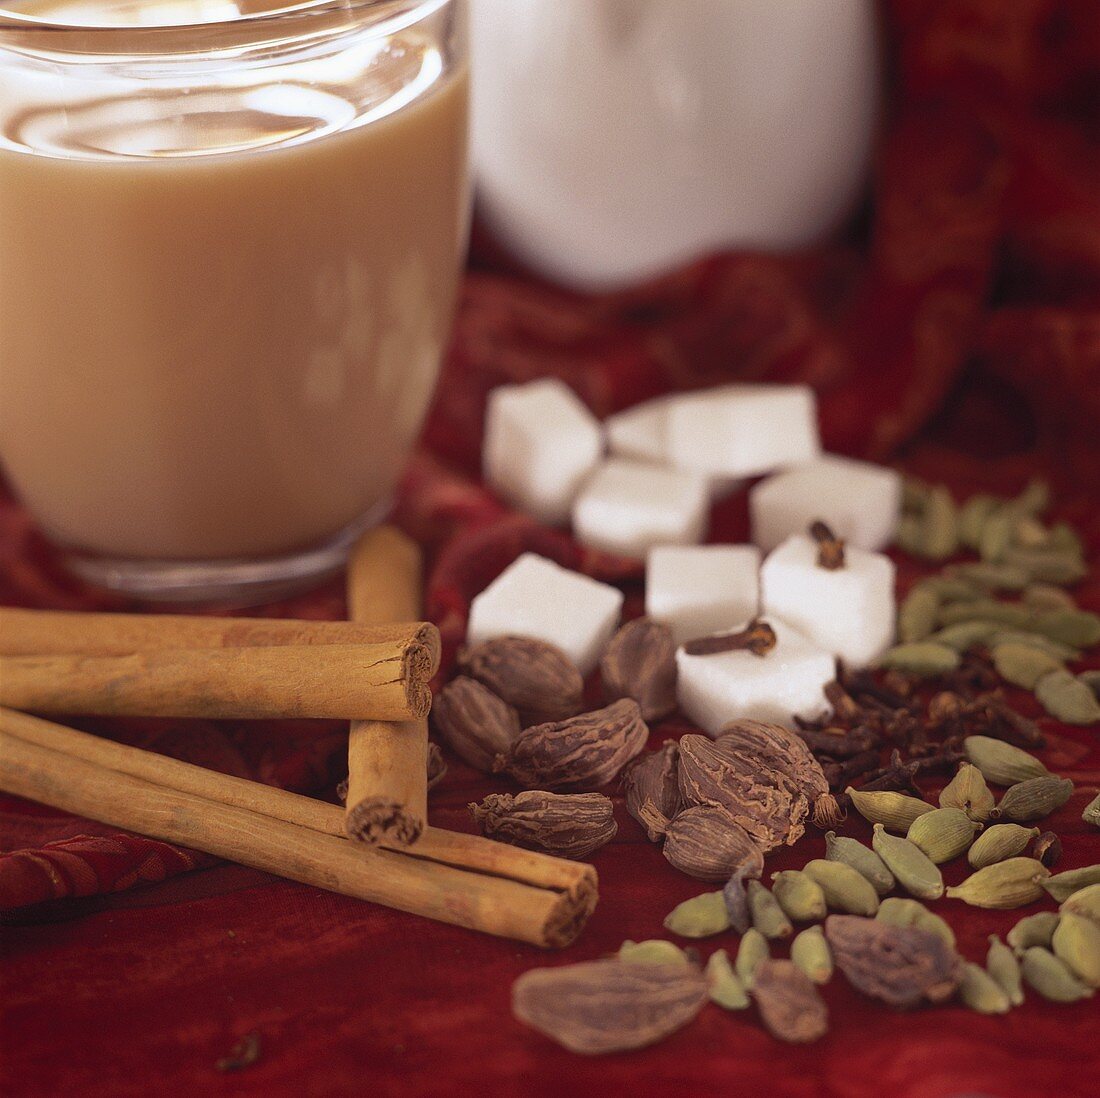 A glass of yogi tea, spices, sugar and milk jug beside it